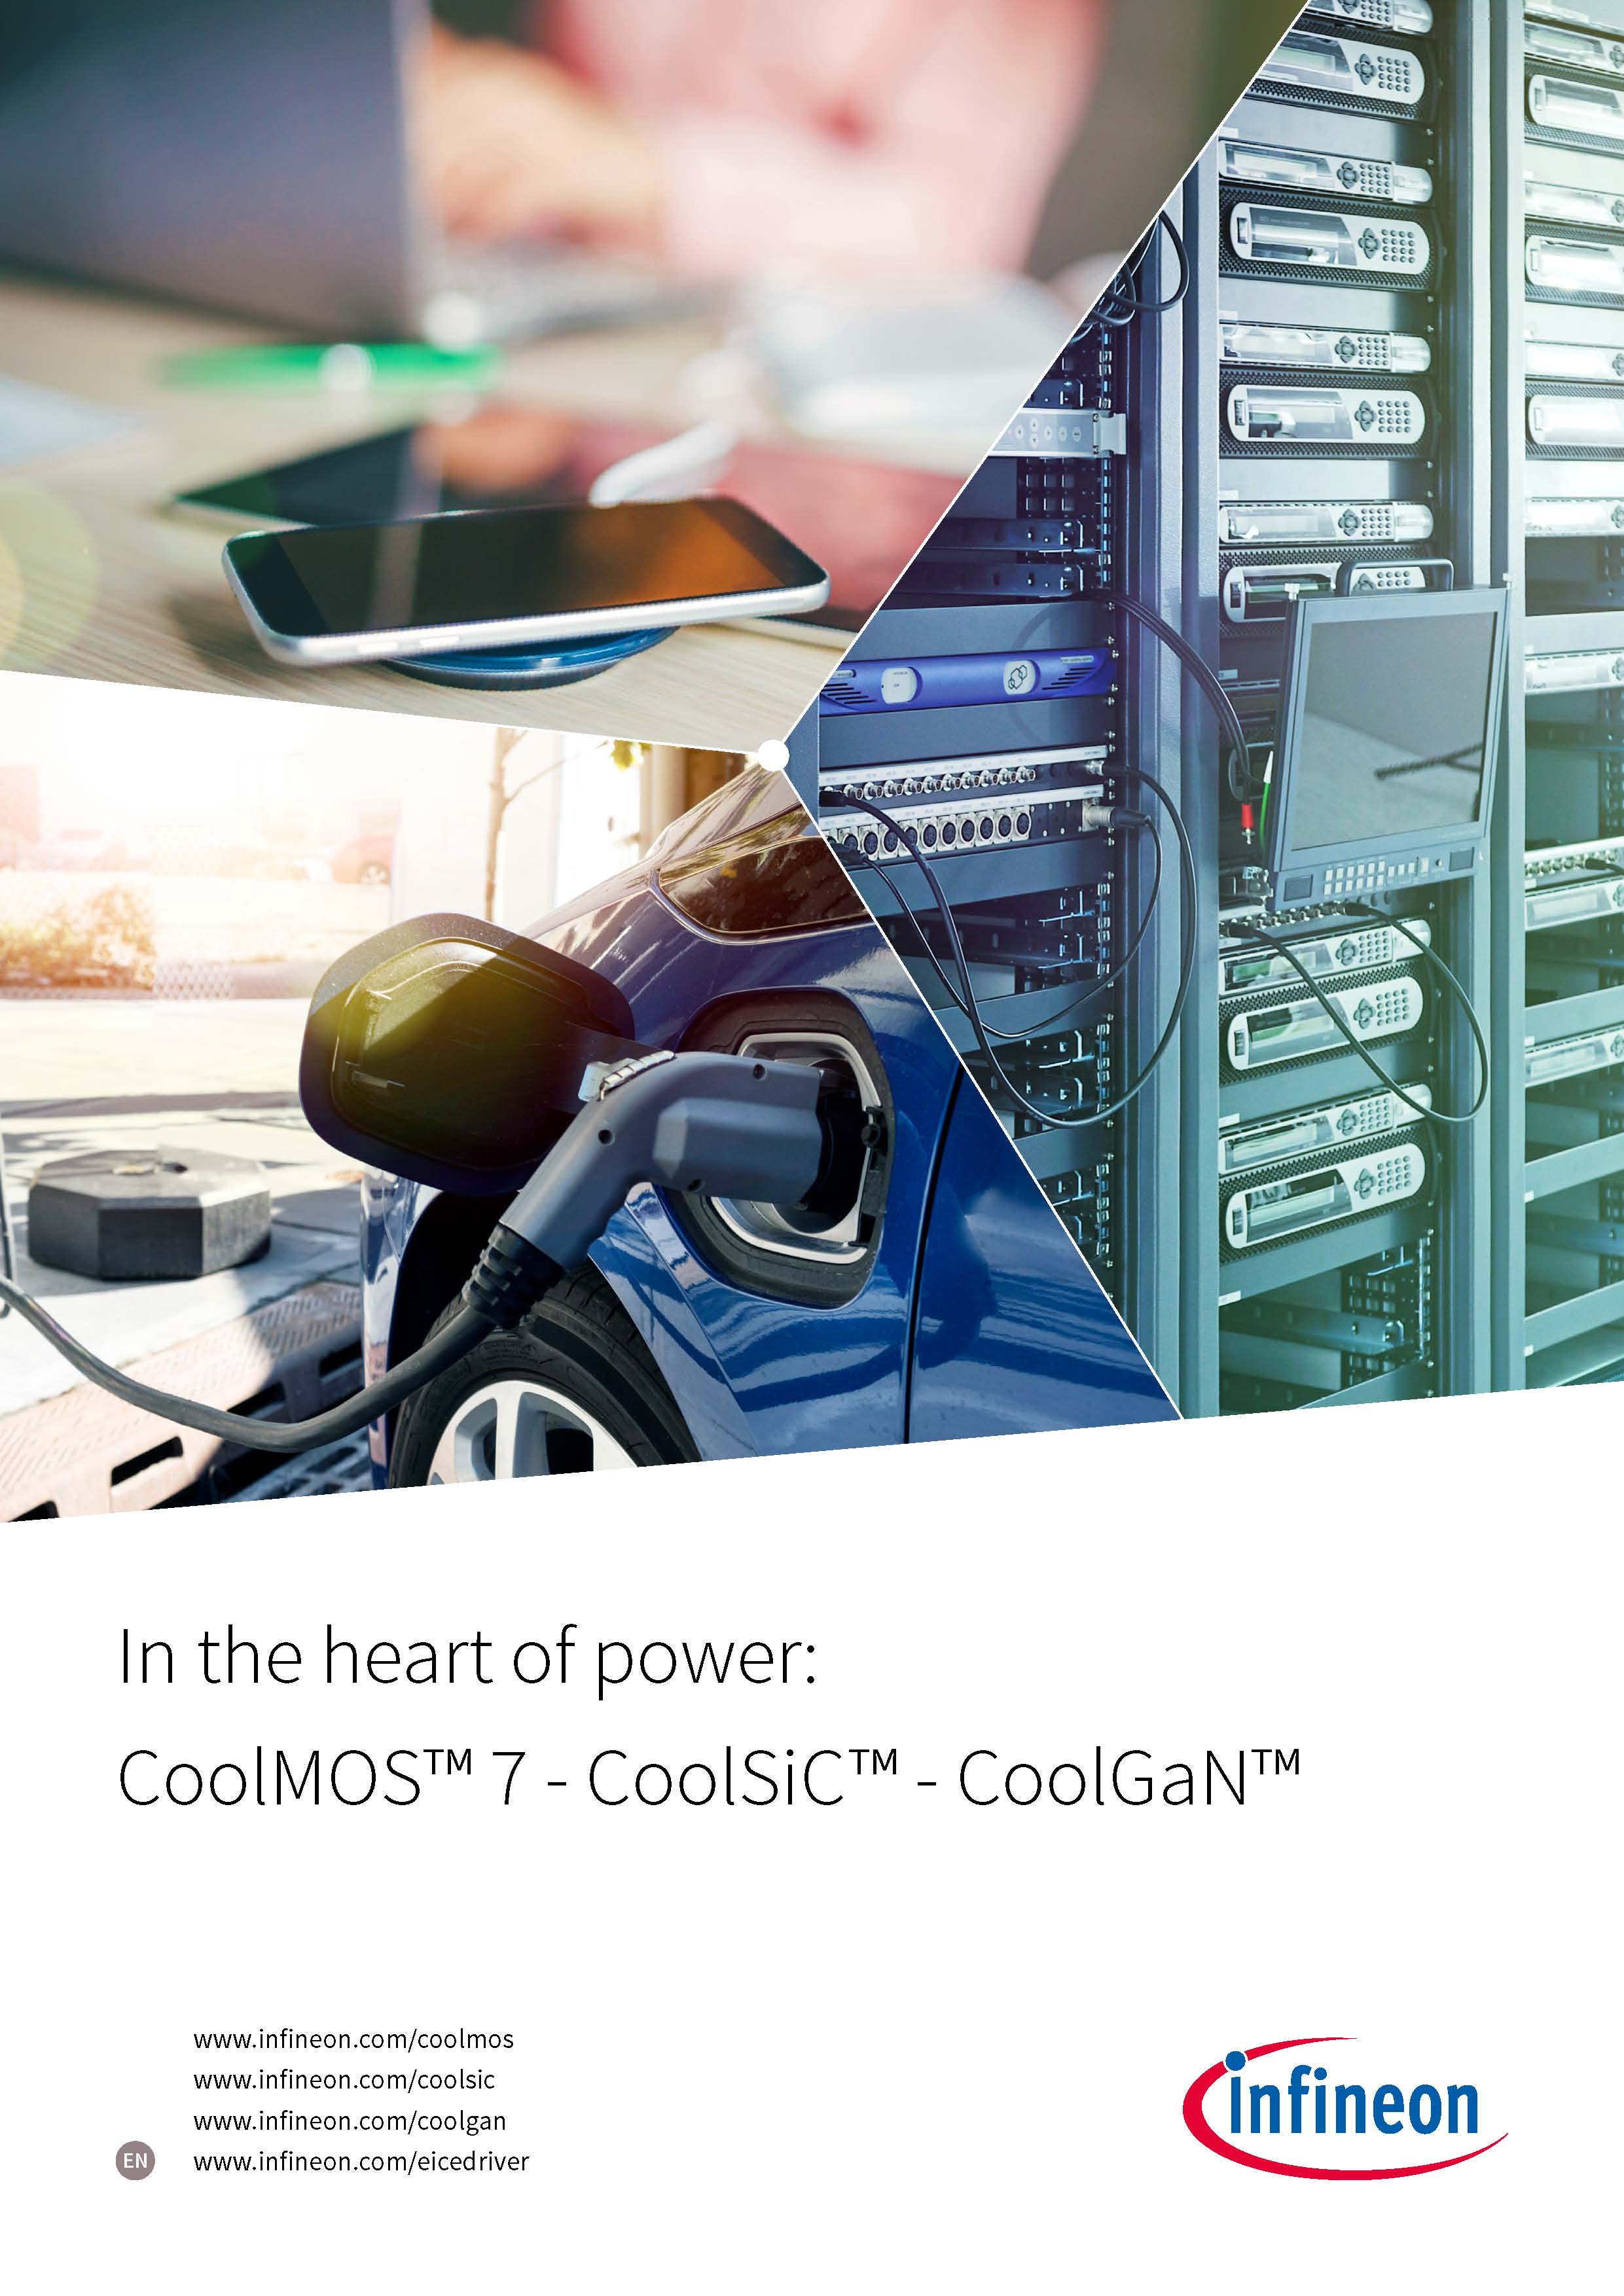 CoolMOS™ 7 - CoolSiC™ - CoolGaN™